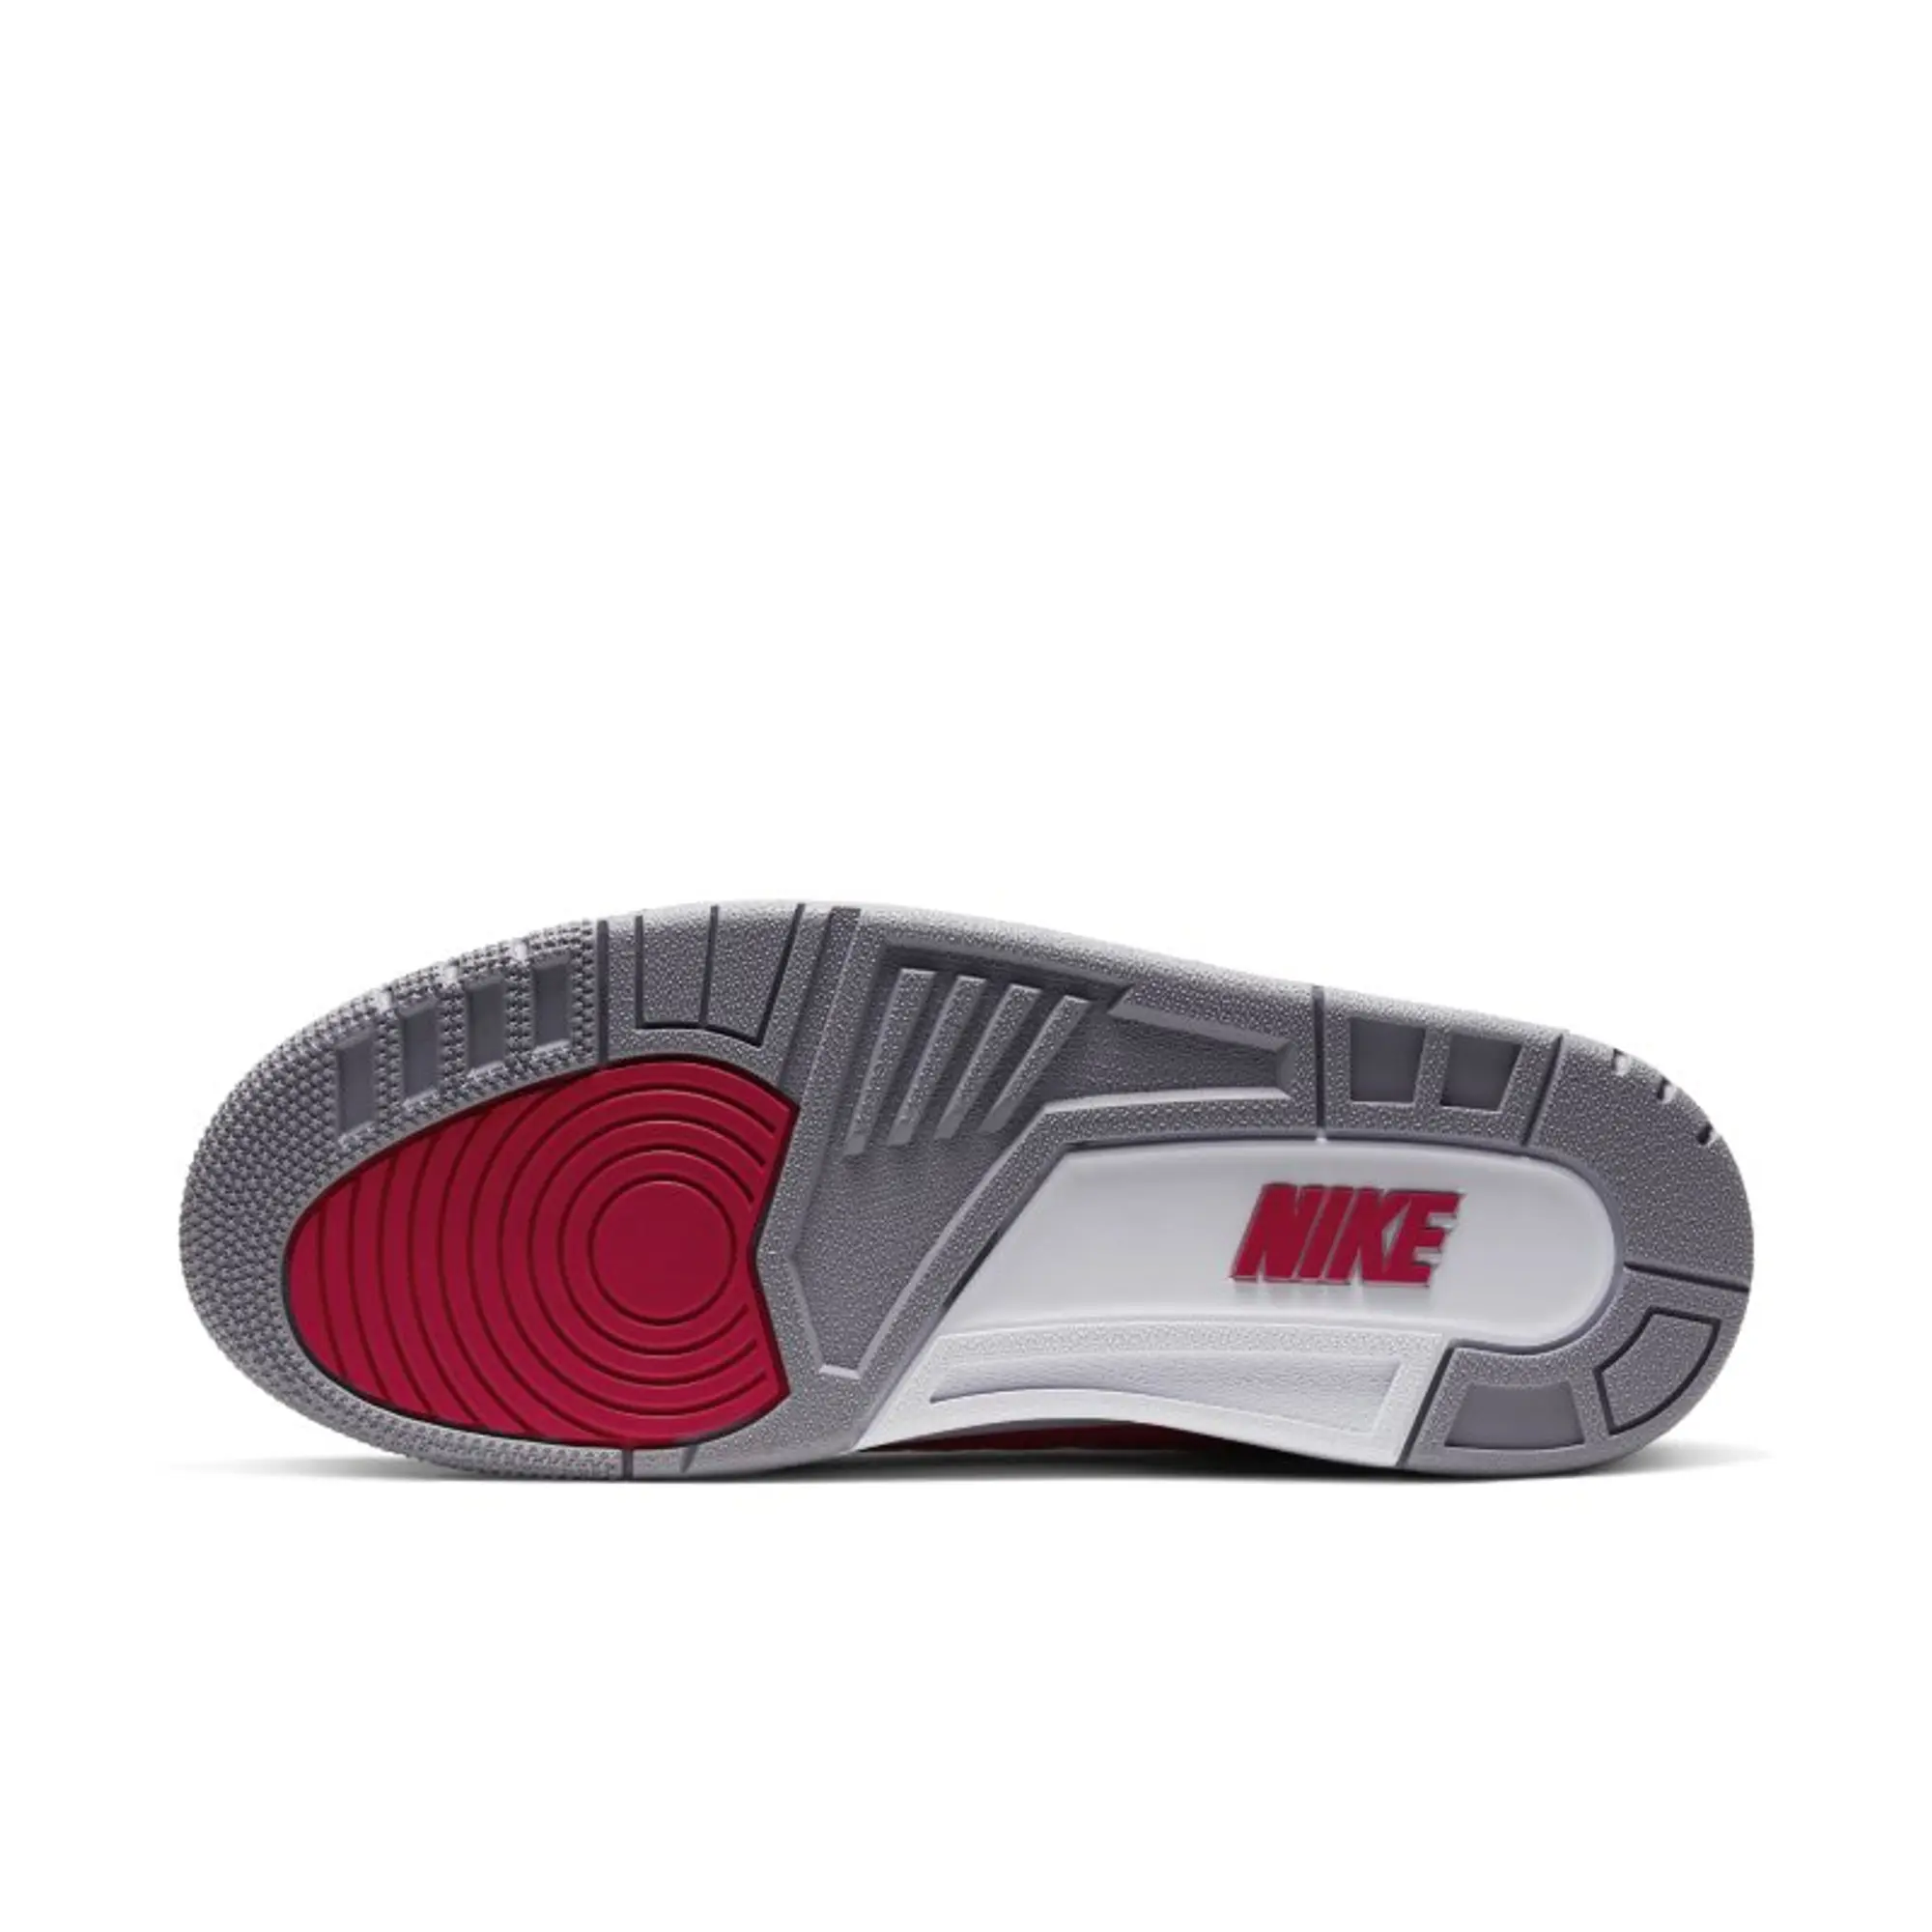 Nike Jordan Air Jordan 3 Retro SE Unite Fire Red